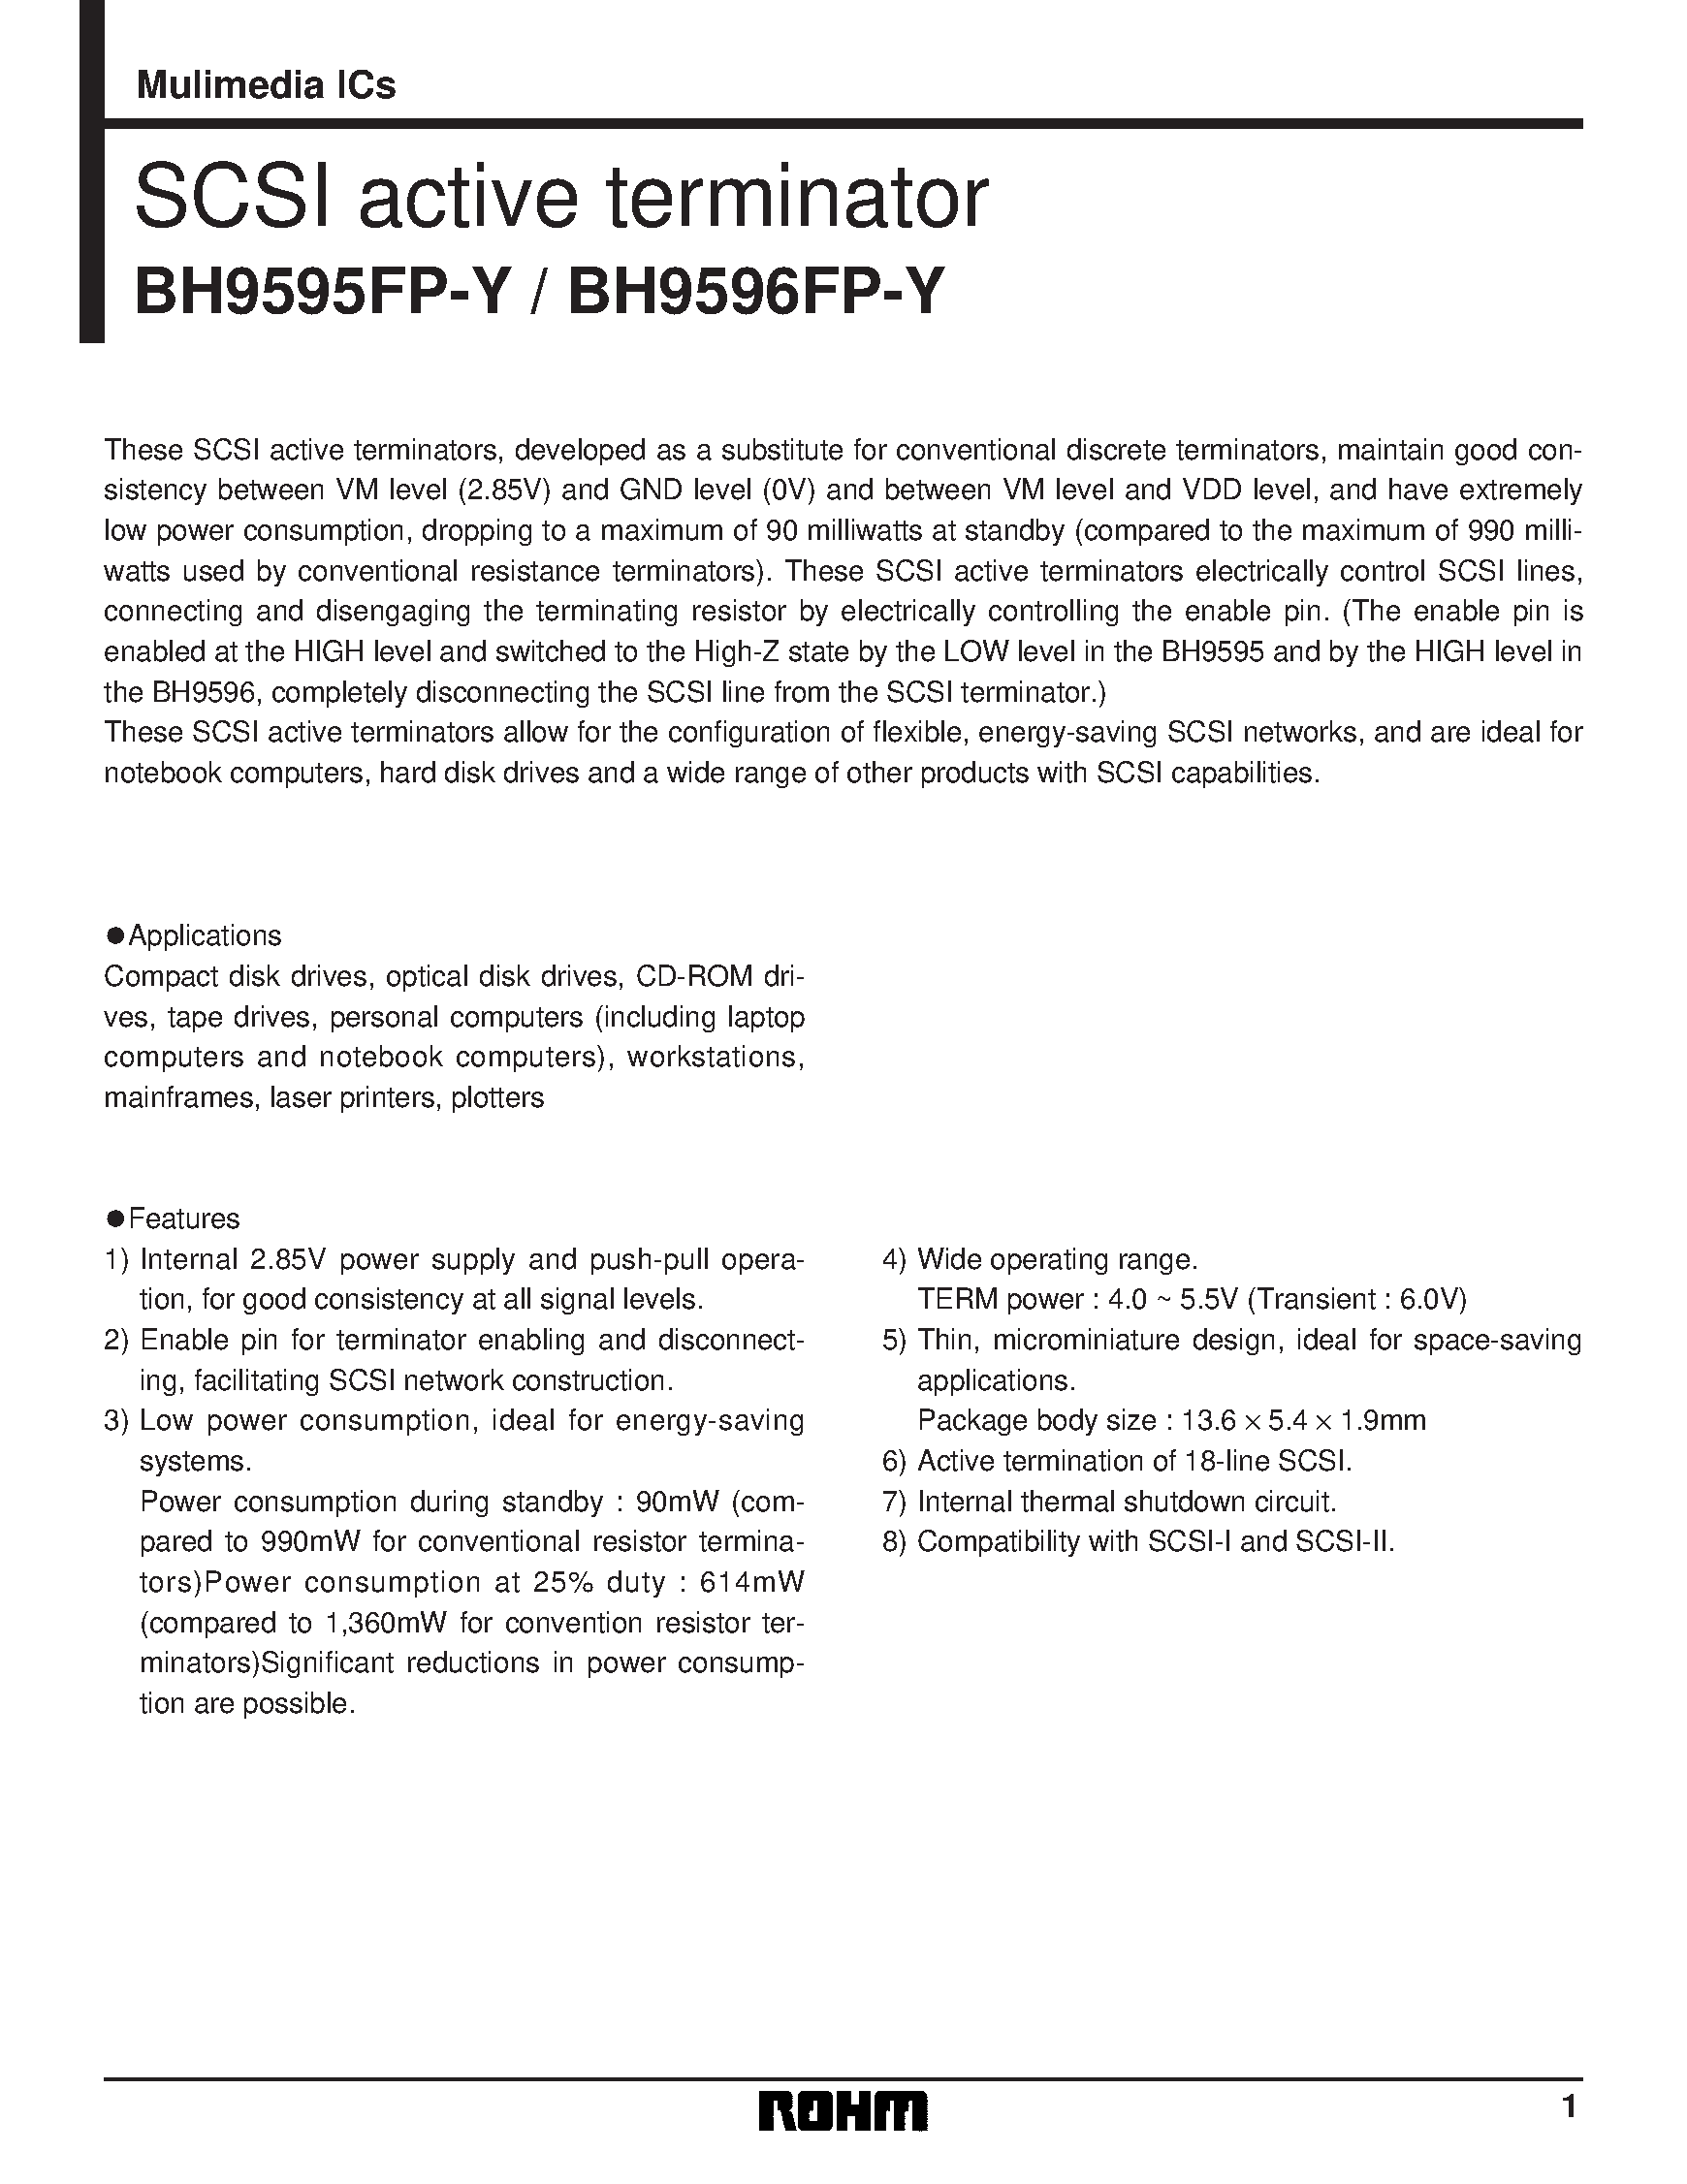 Даташит BH9596FP-Y - SCSI active terminator страница 1